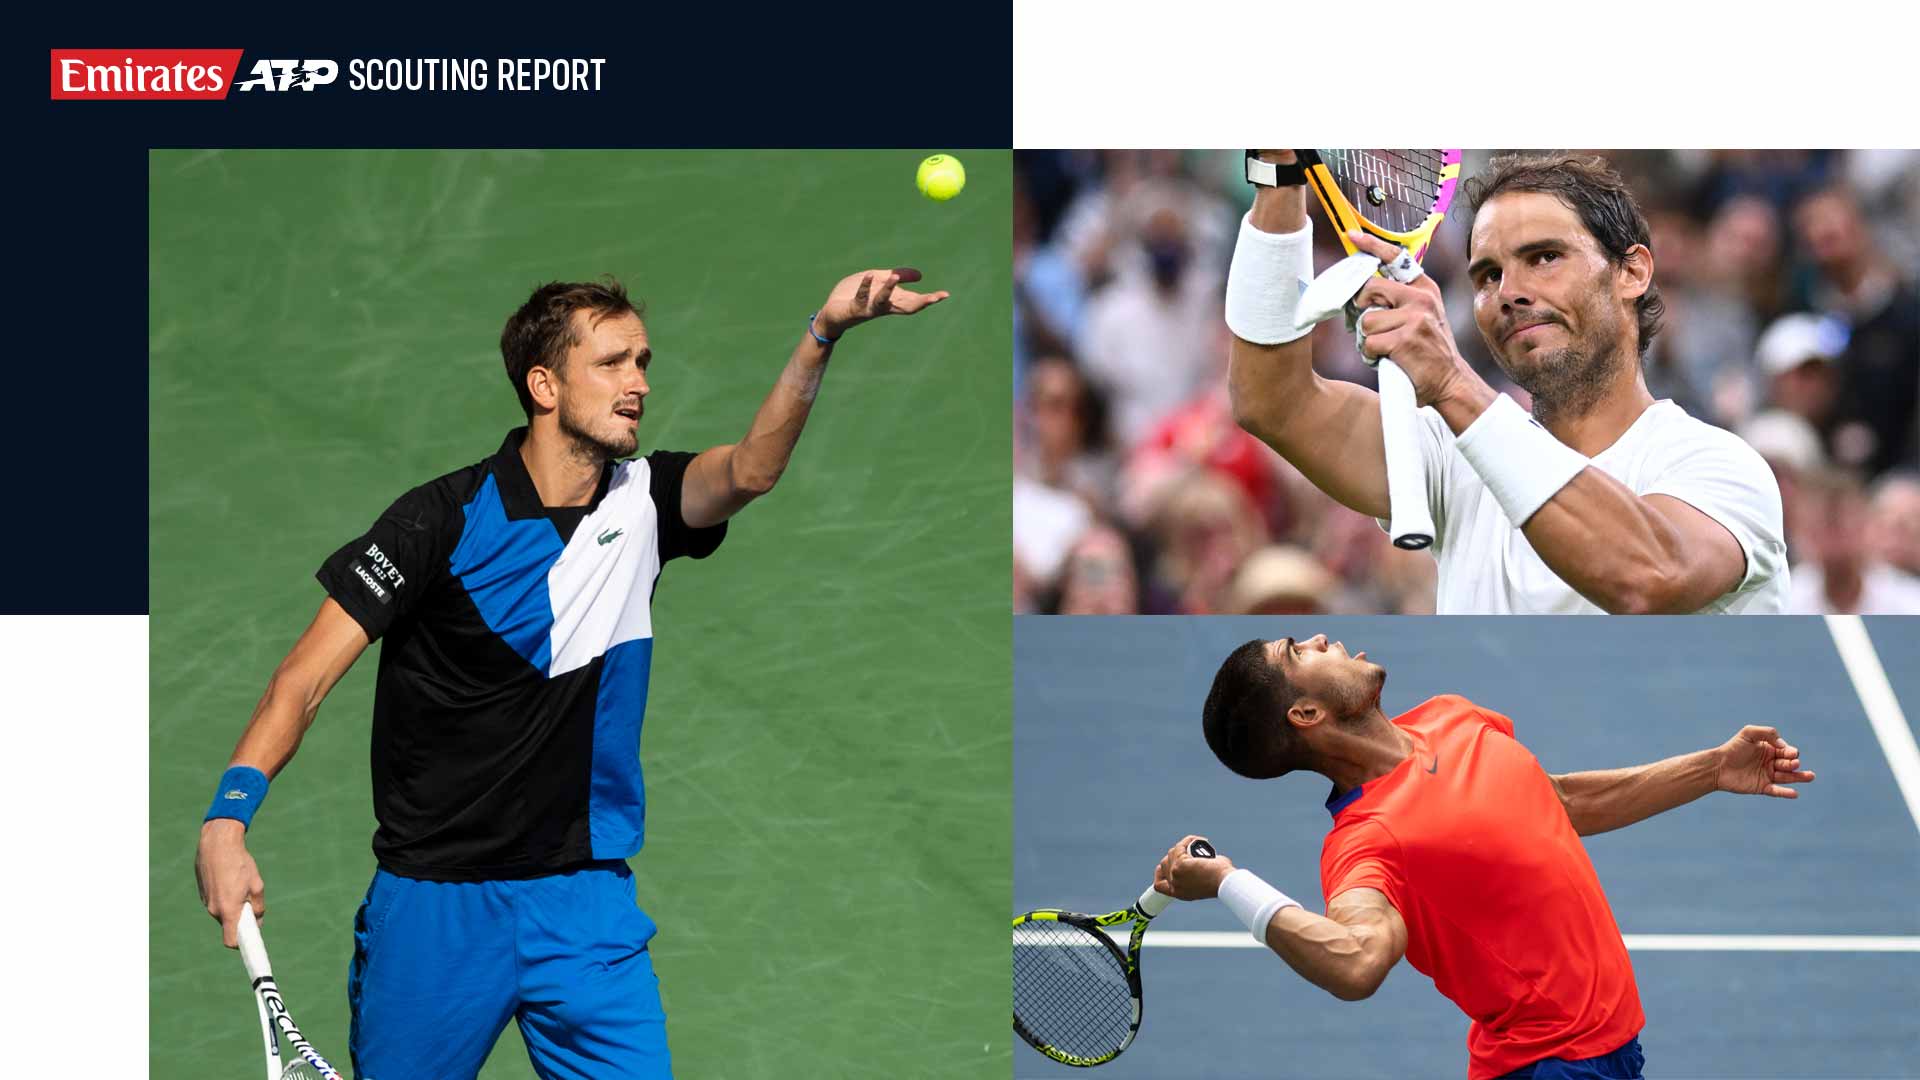 Теннис Медведев Мексика. Rafael Nadal vs Medvedev. Теннис Медведев на грунте. Атр теннис результаты